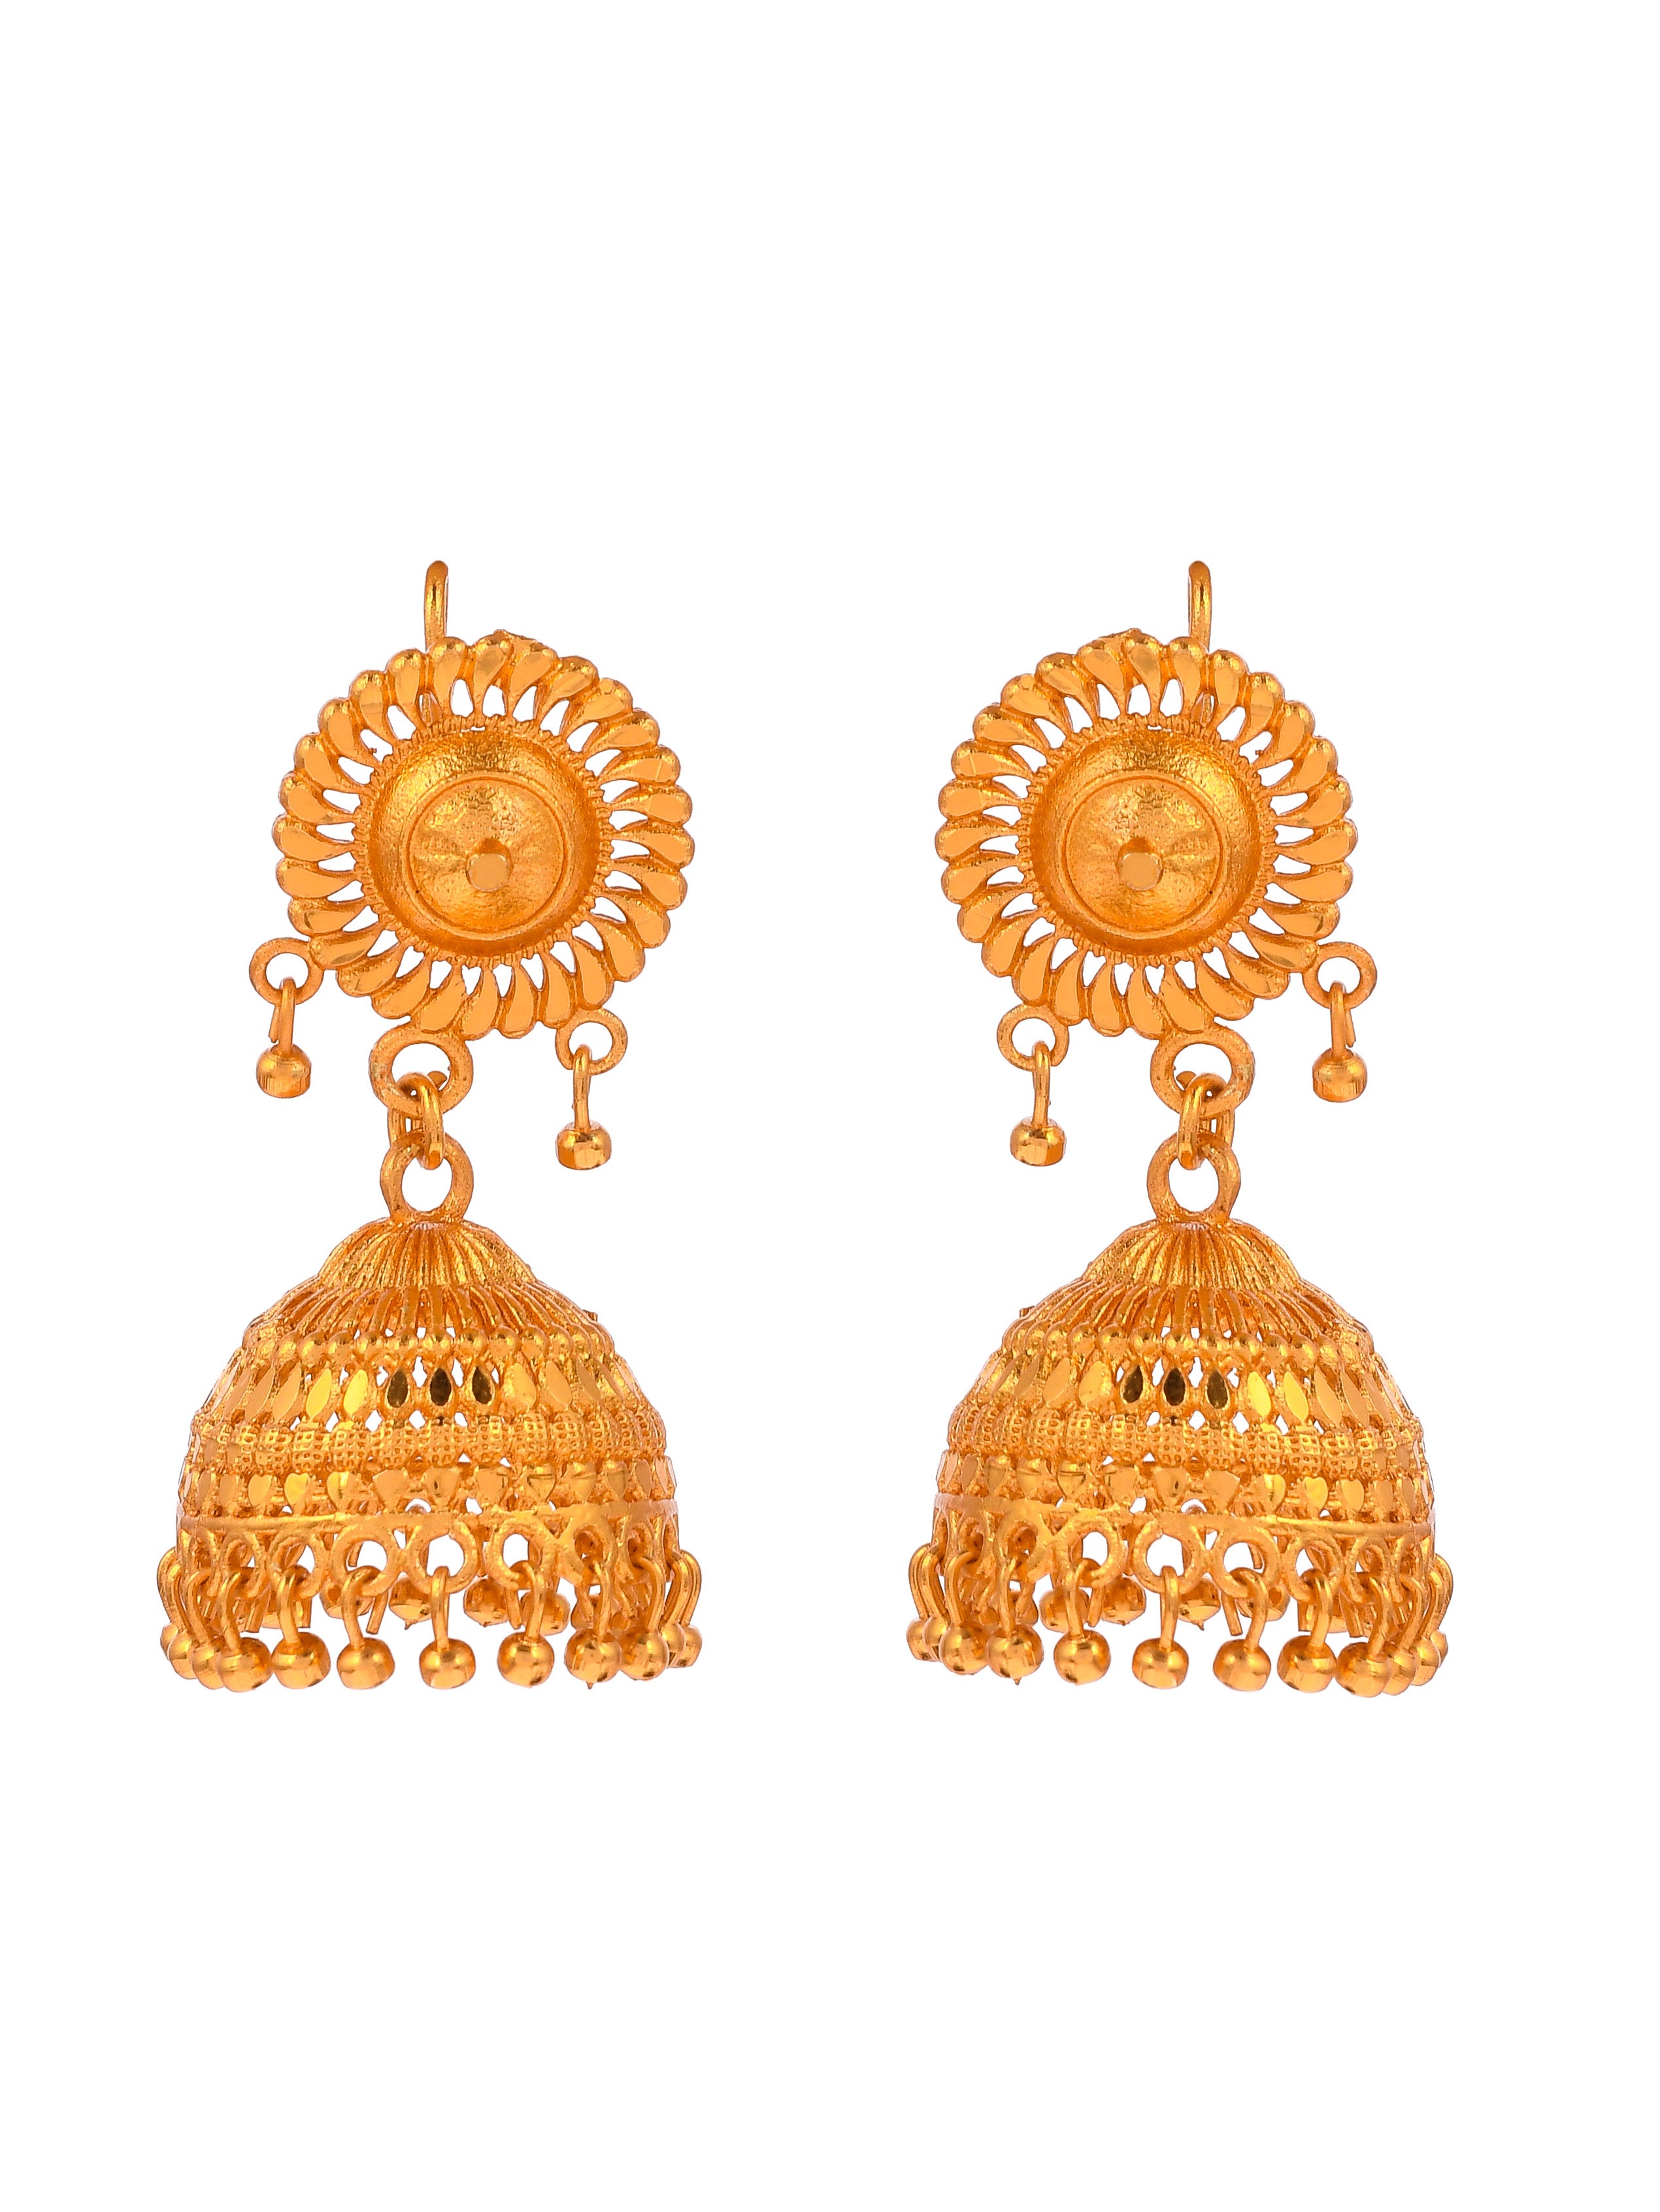 Certified Bis Hallmark 22kt Gold Earrings 2 Piece With Hallmark  Certificate., सोने की बालियां - The Rajlaxmi Jewellers, Kolkata | ID:  2849753003733